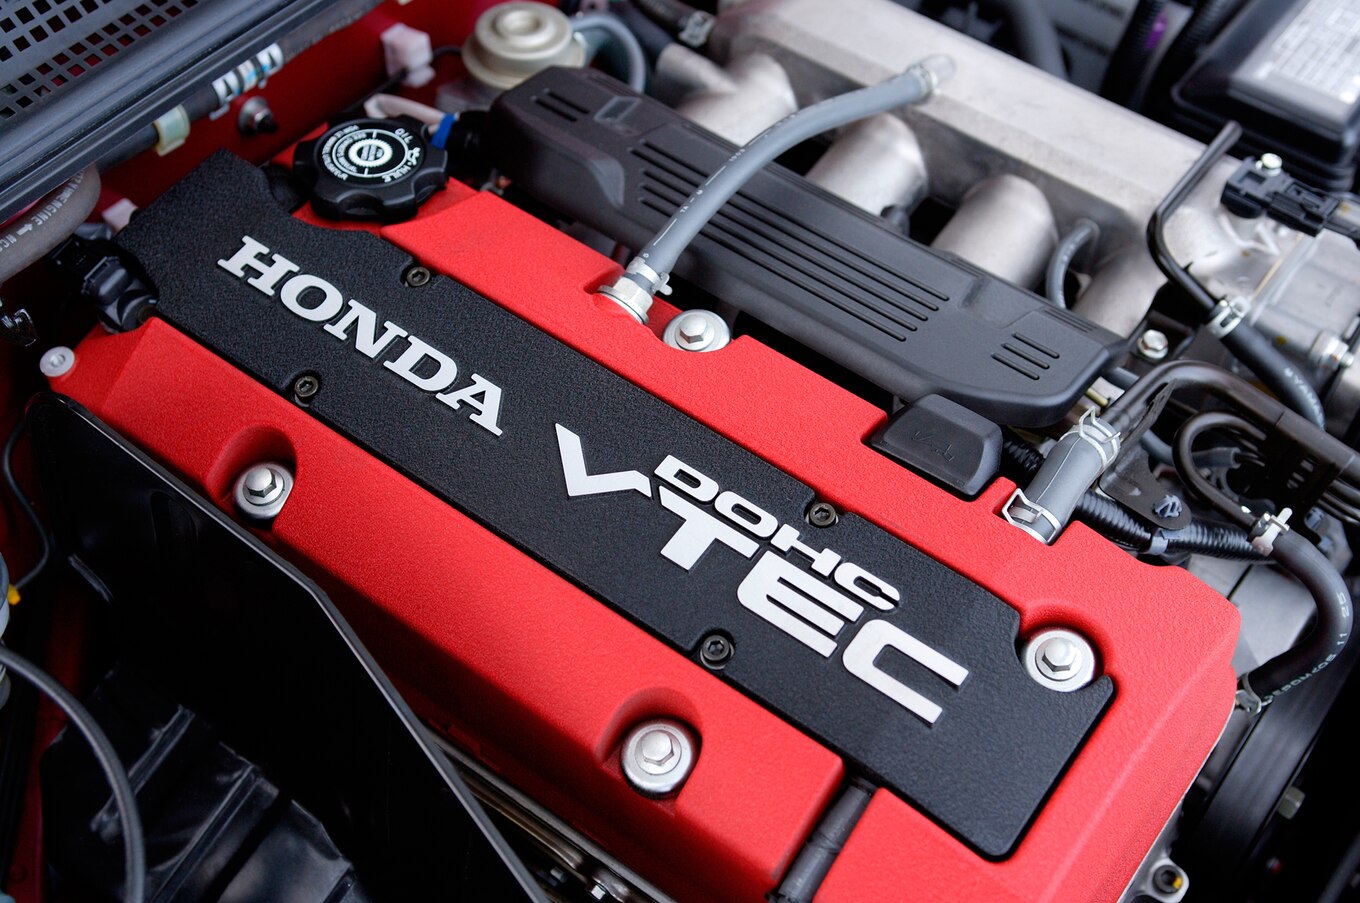 Honda S2000 engine